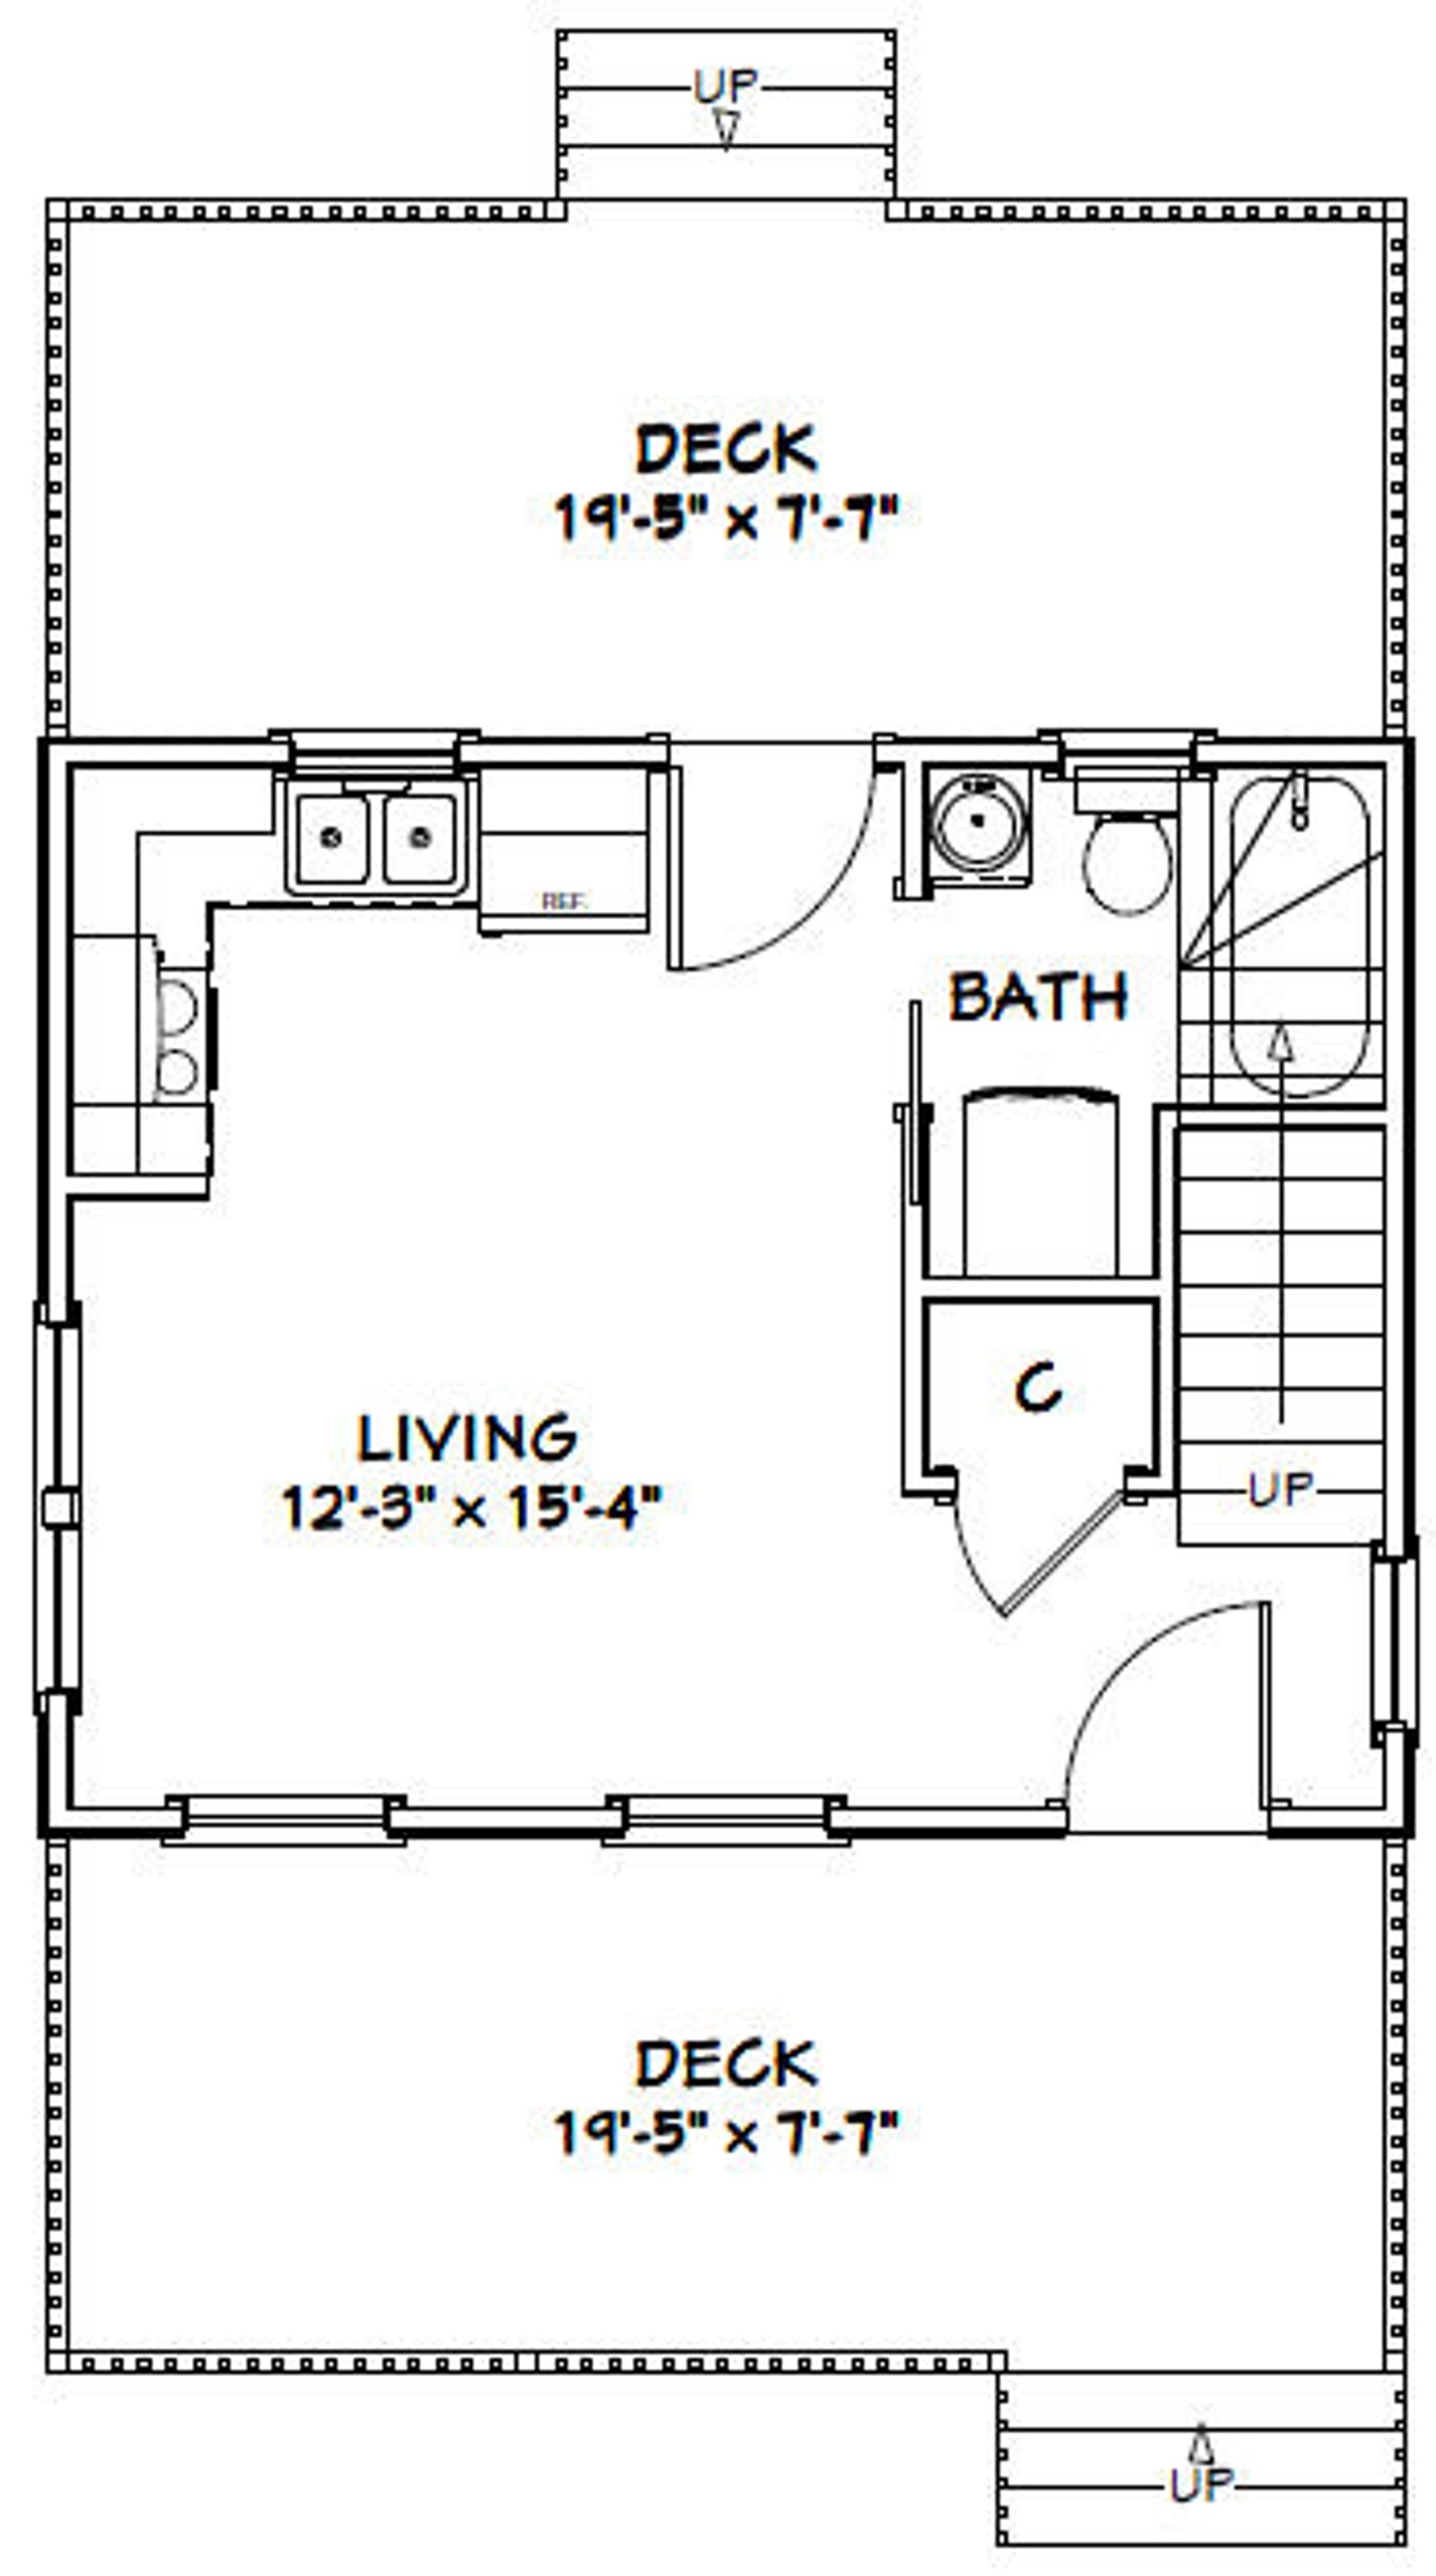 20x16 House 2Bedroom 1Bath 630 sq ft PDF Floor Plan Etsy